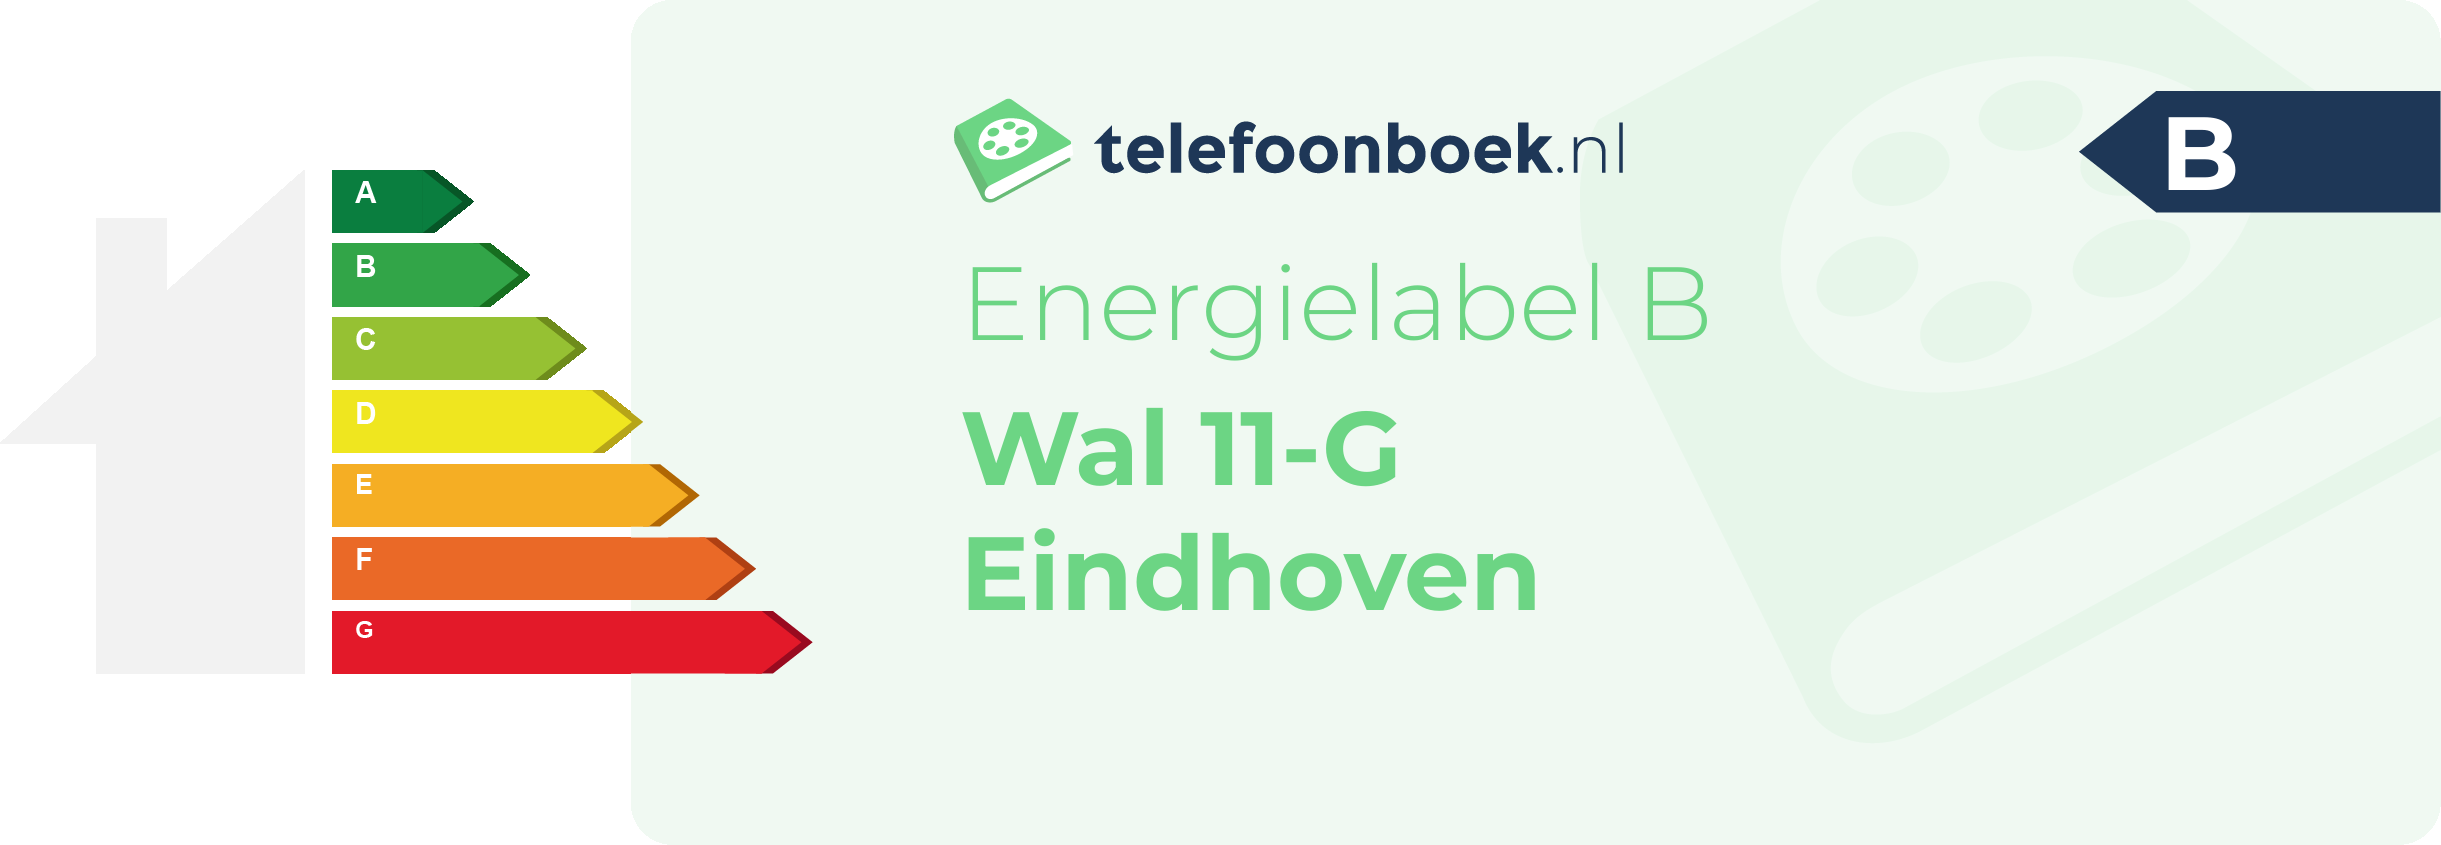 Energielabel Wal 11-G Eindhoven